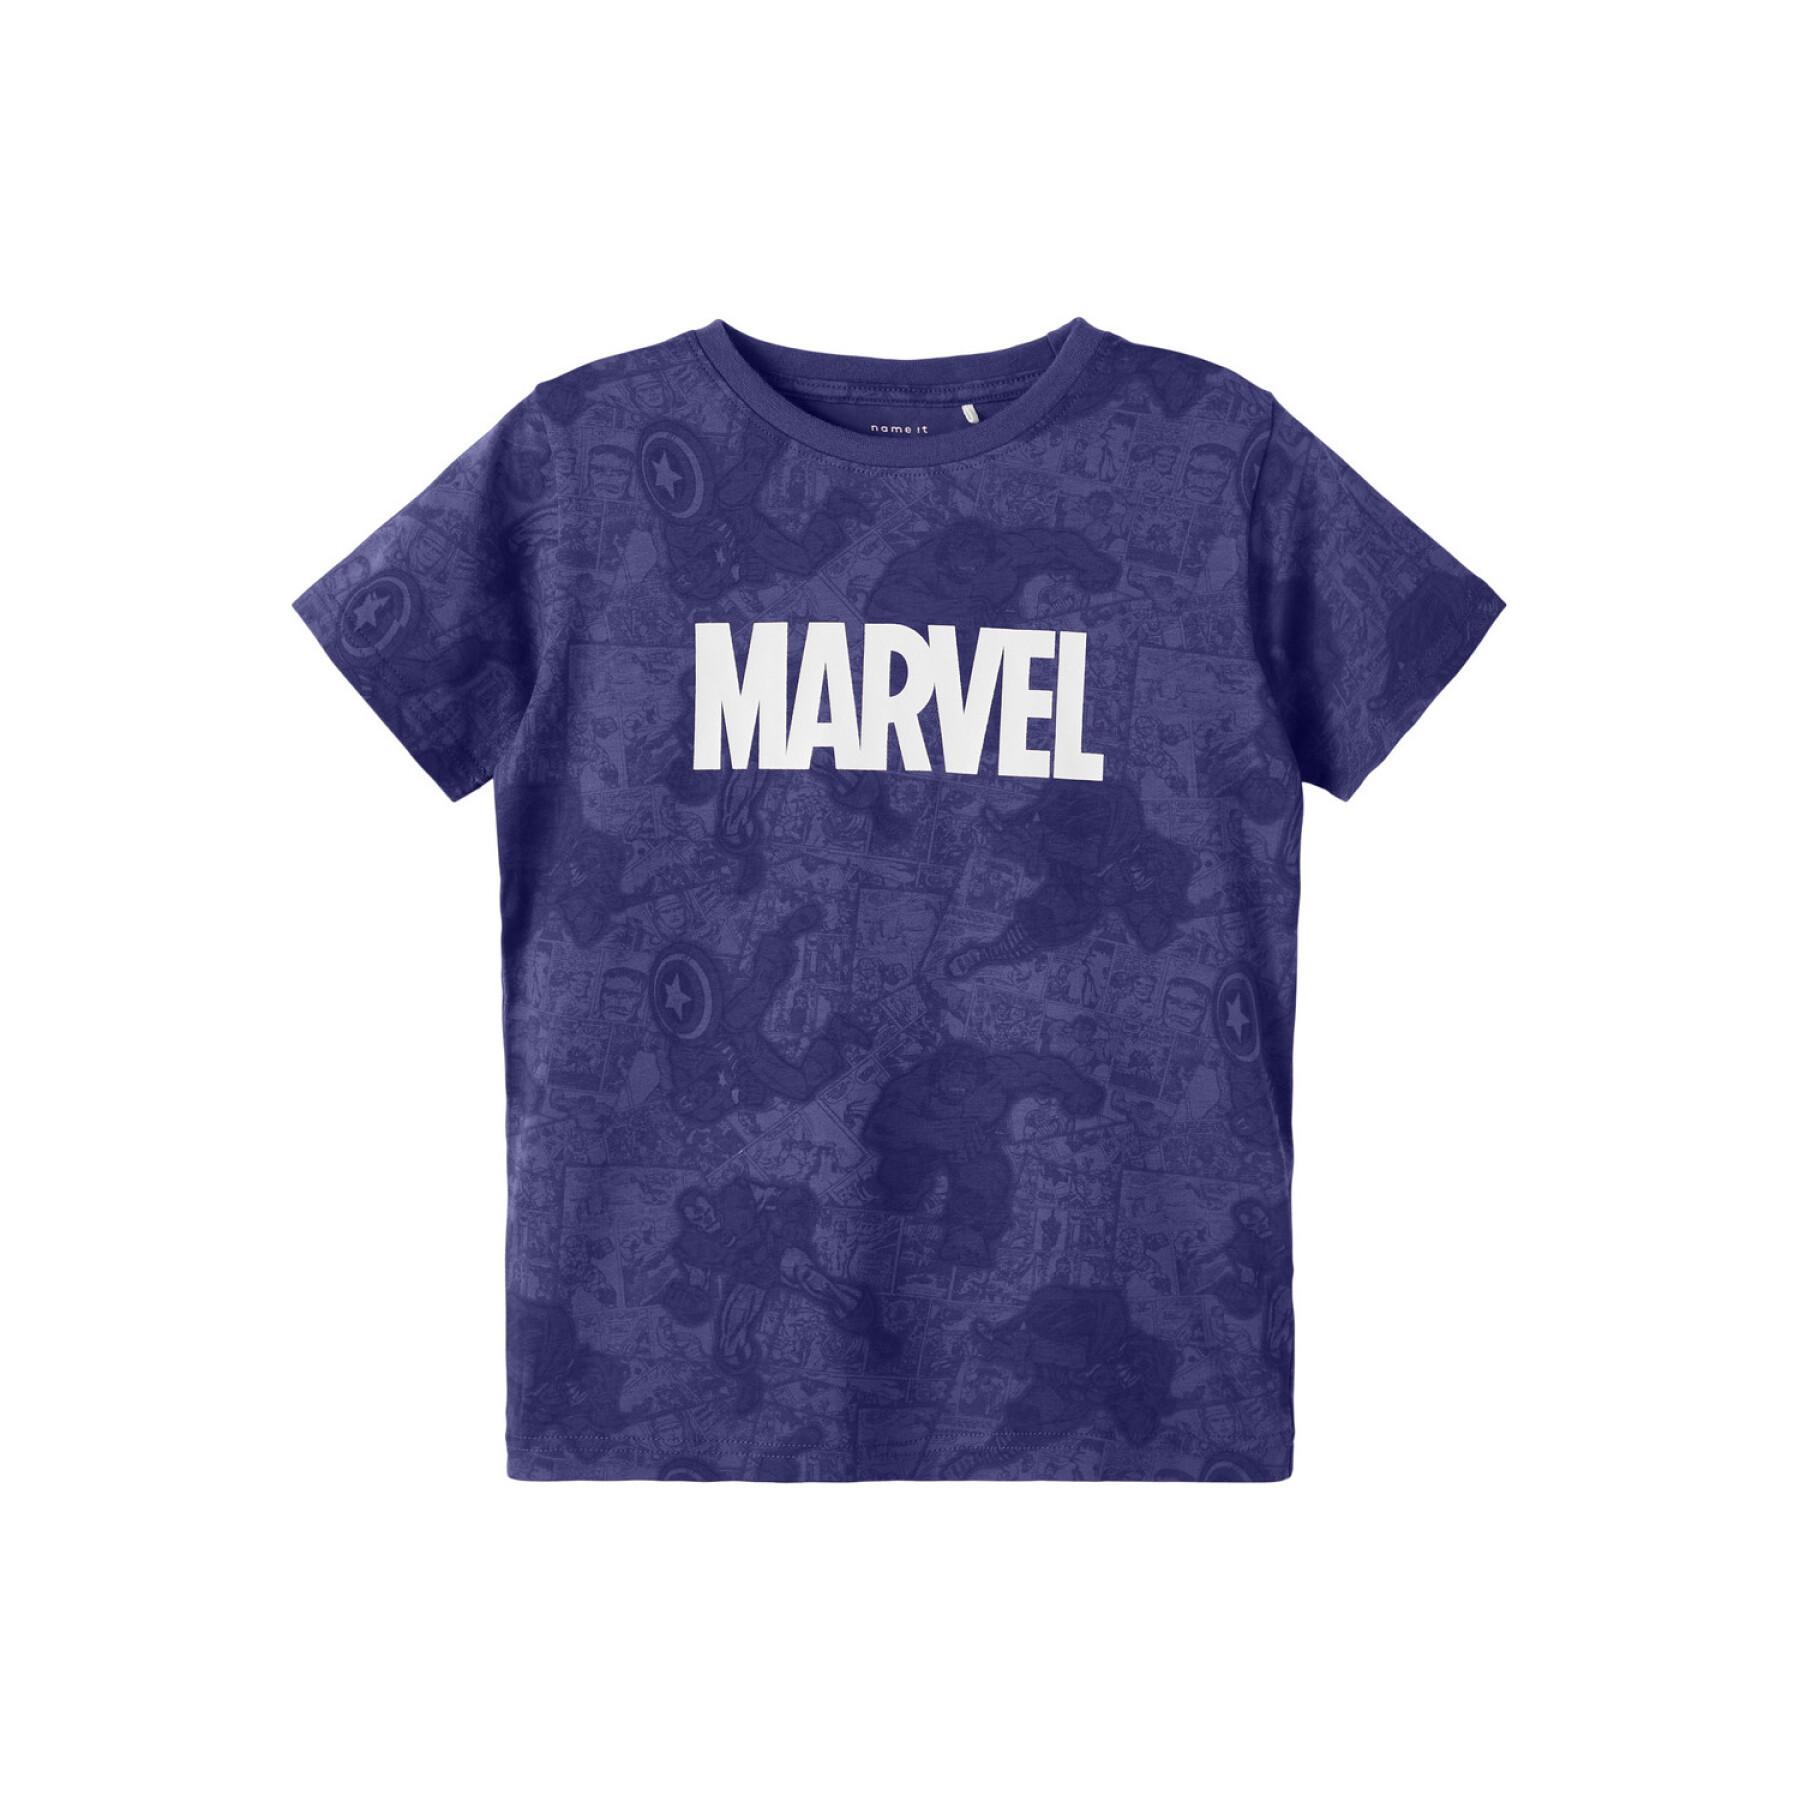 Camiseta para niños Name it Mangus Marvel